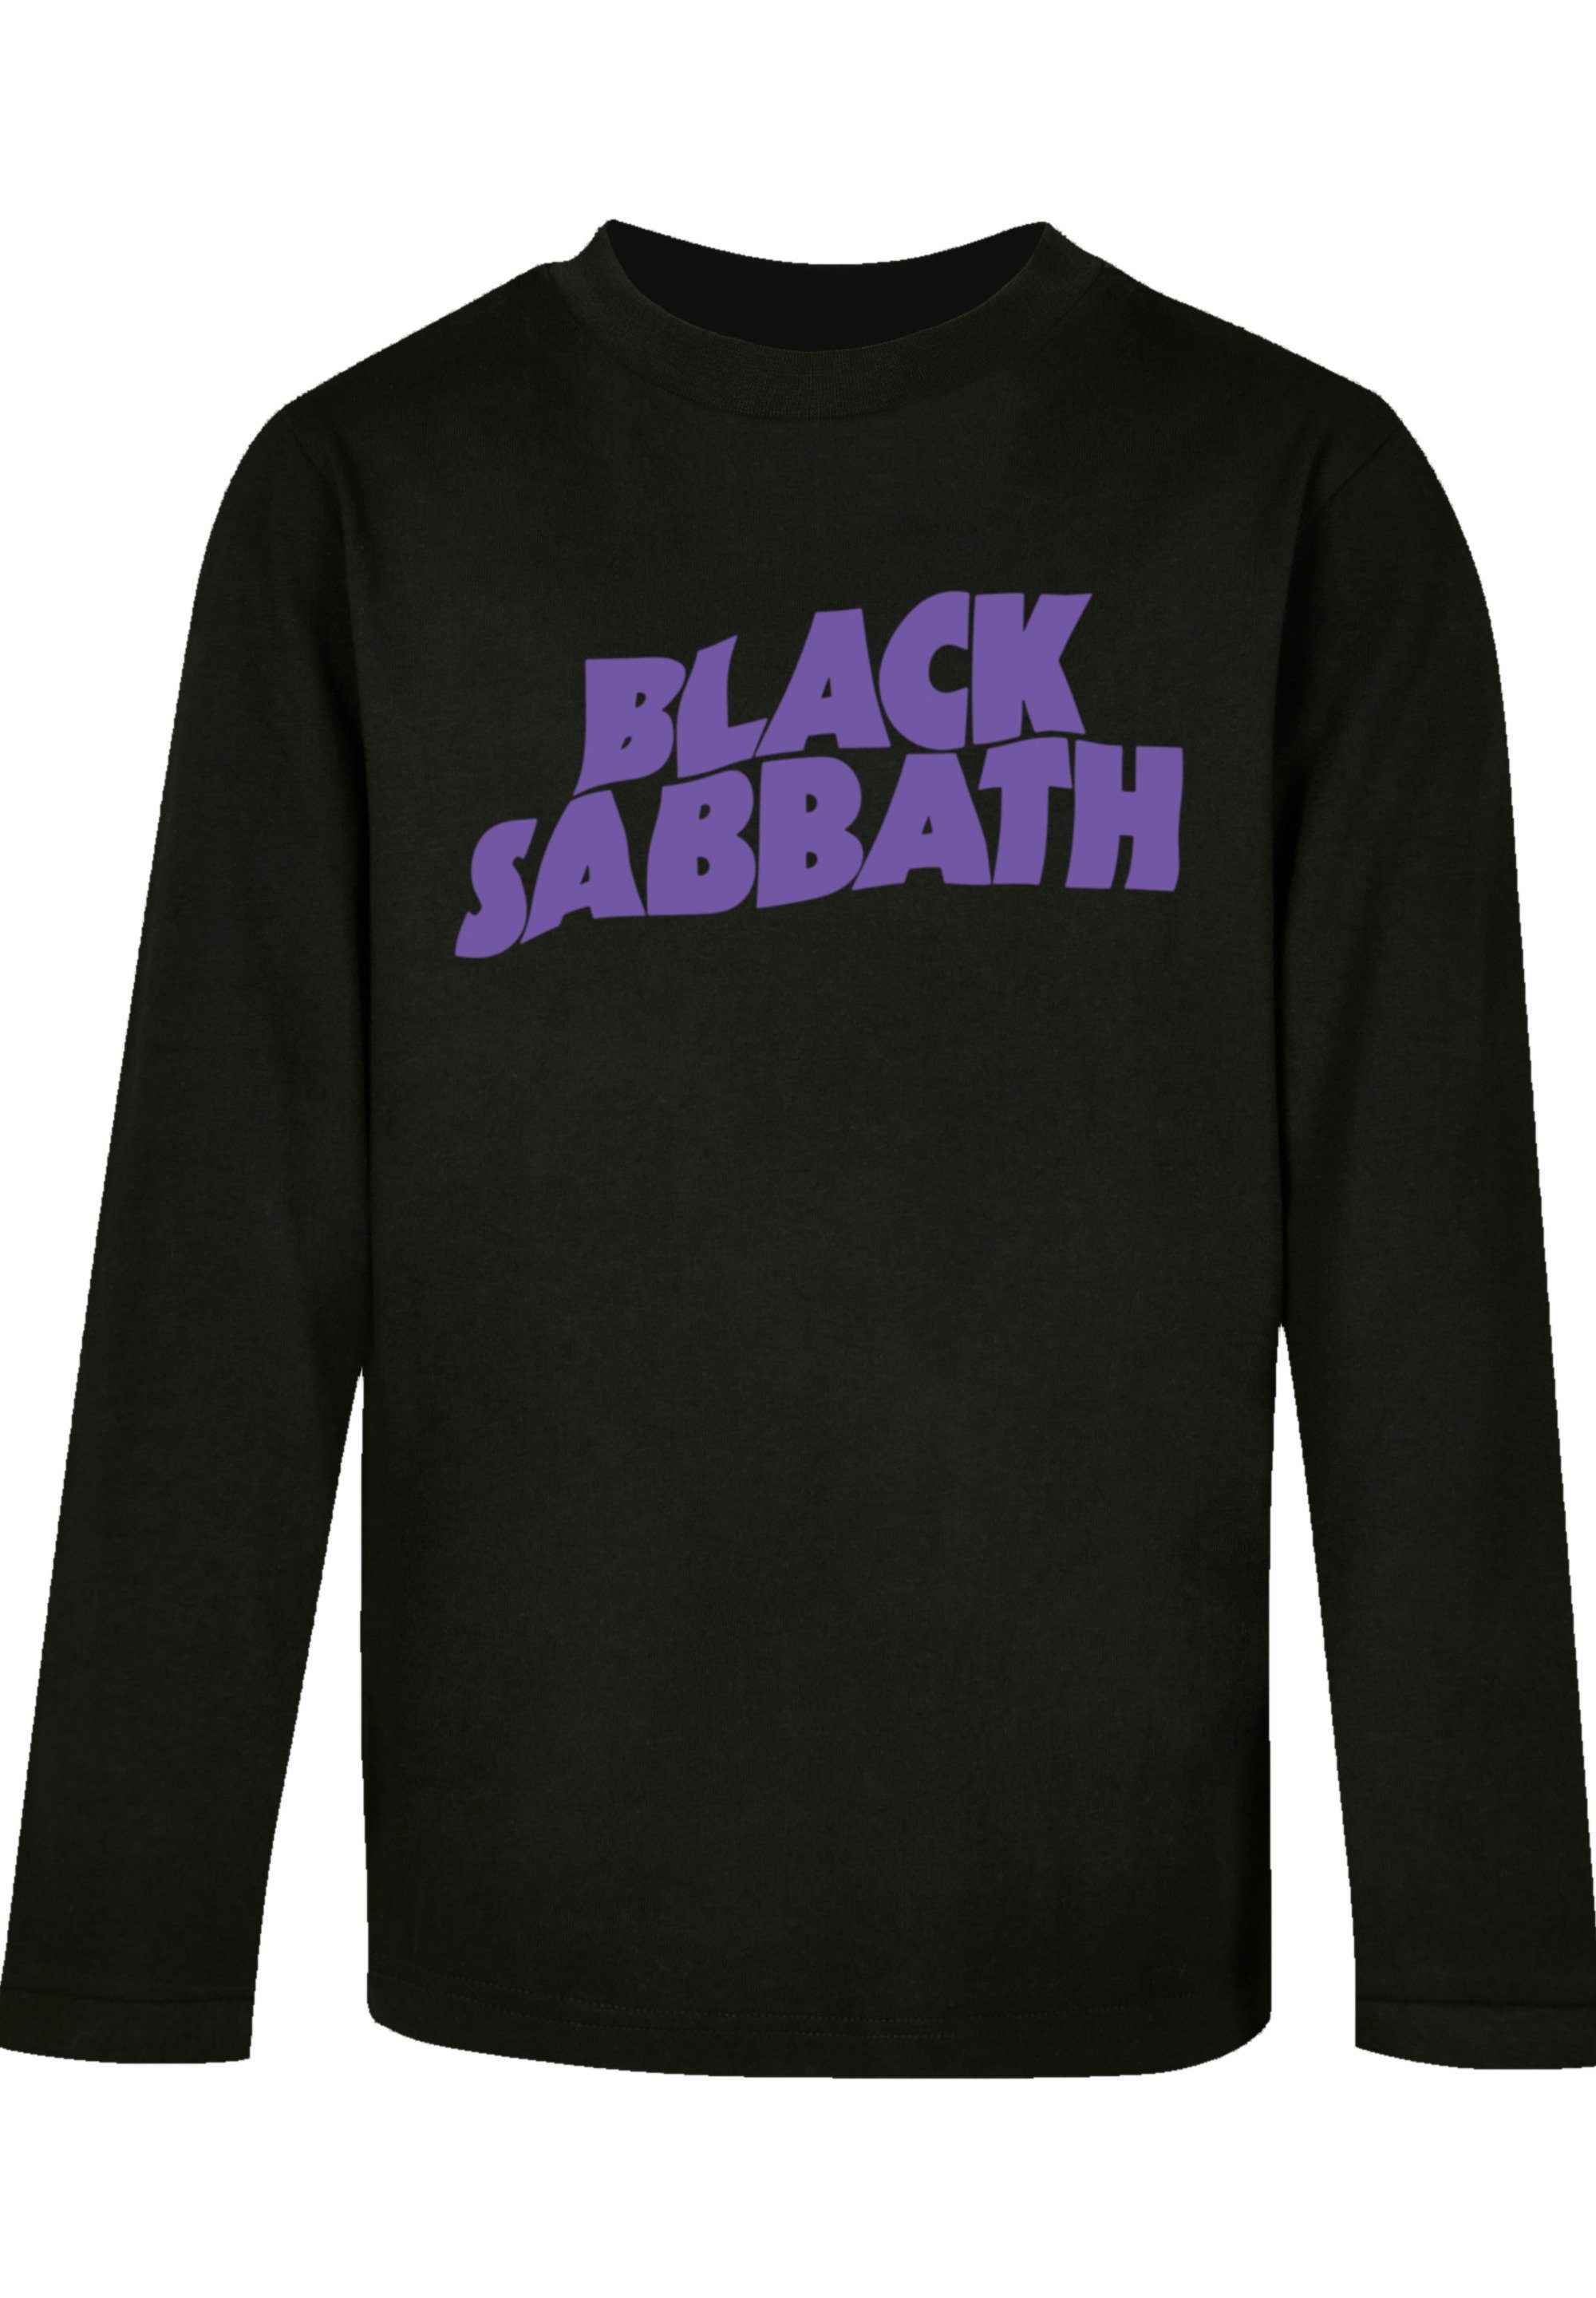 F4NT4STIC T-Shirt Logo schwarz Wavy Black Sabbath Print Black